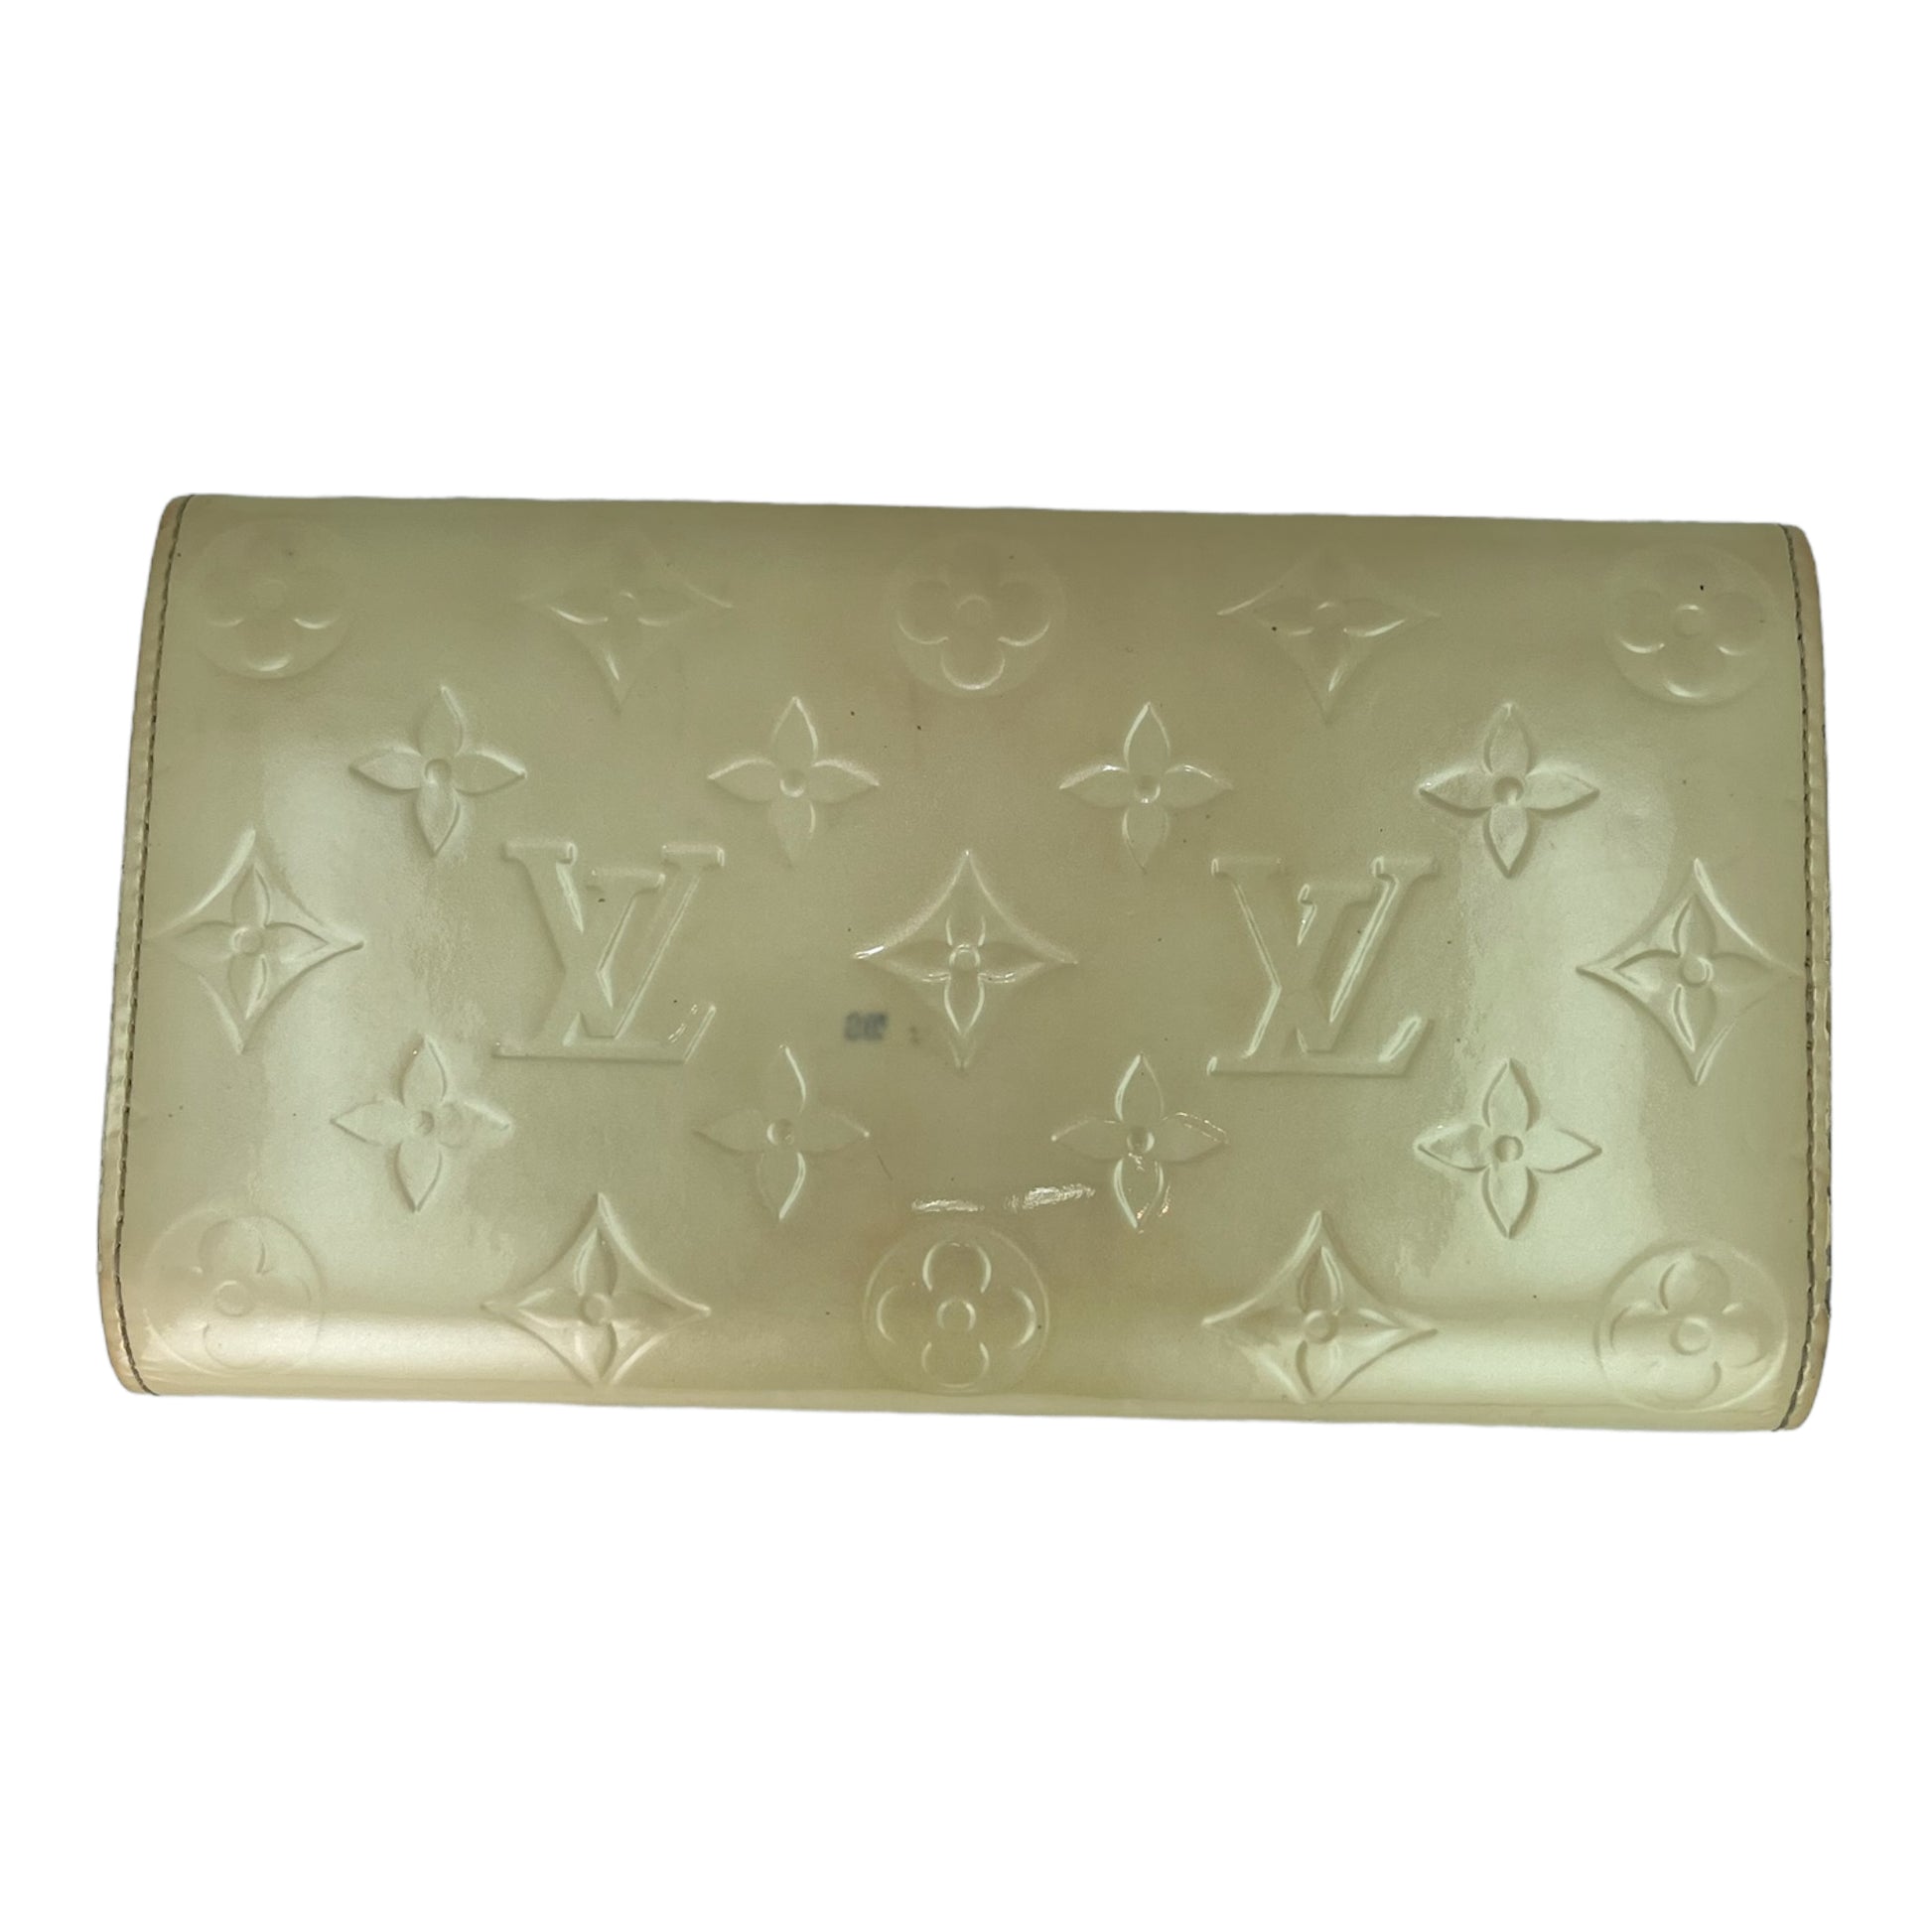 Louis Vuitton Silver Monogram Vernis Compact Zippy Wallet